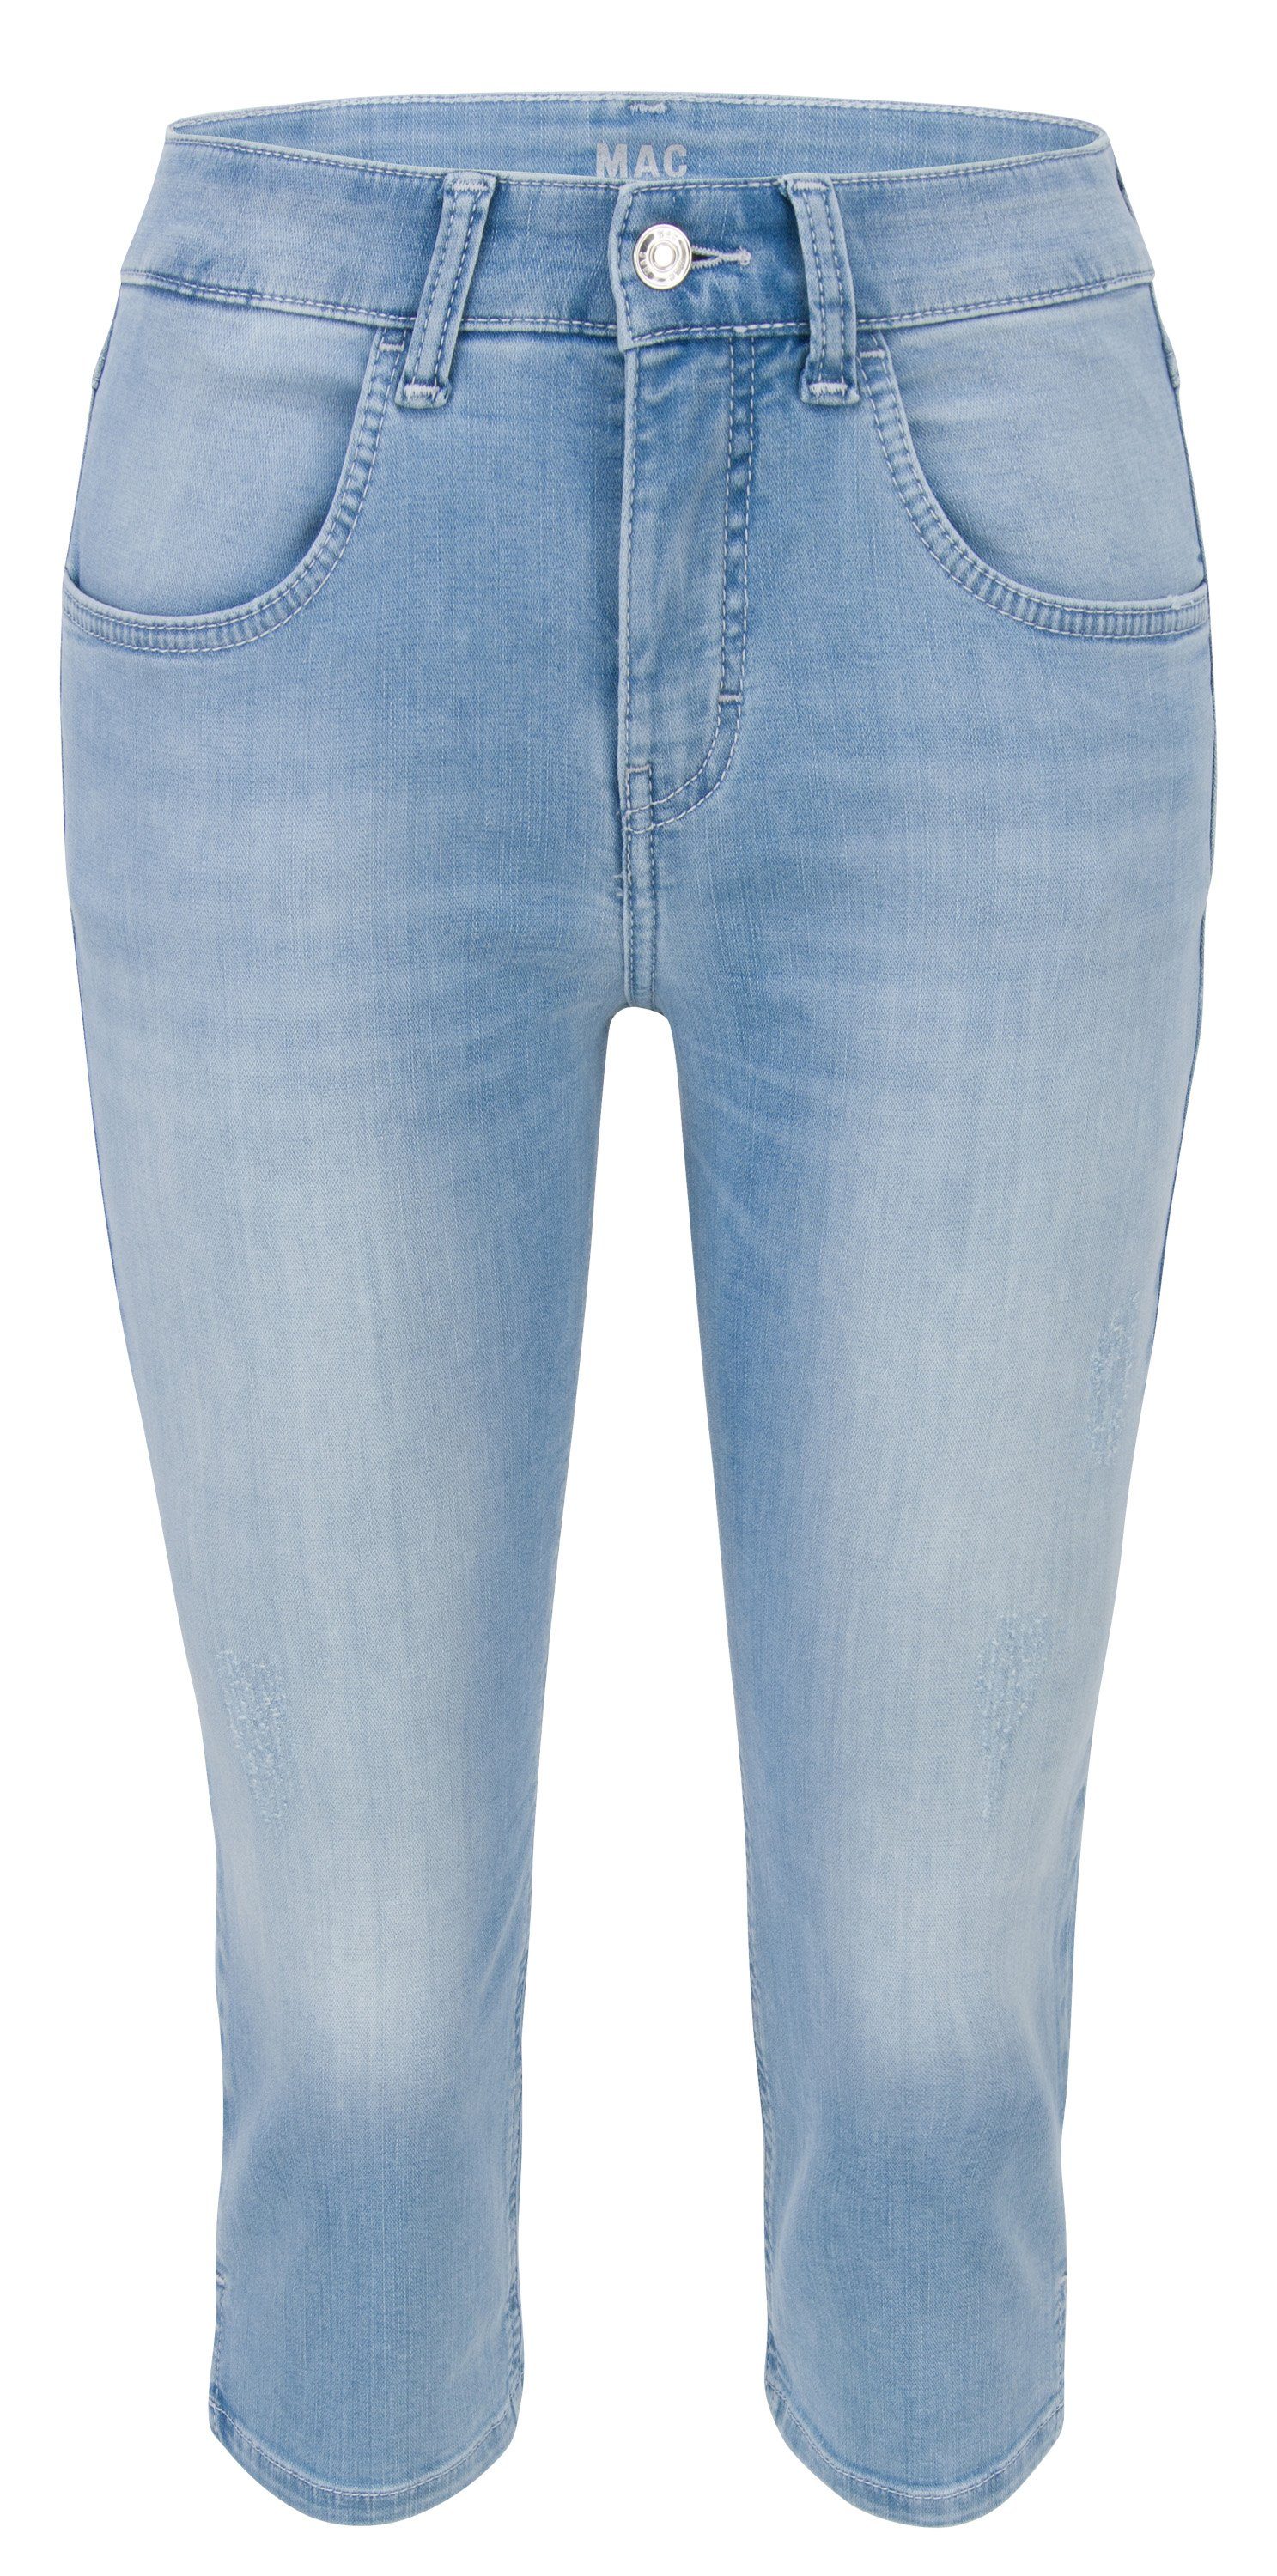 MAC Stretch-Jeans MAC CAPRI light blue grinded wash 5917-90-0394 D426 | Stretchjeans